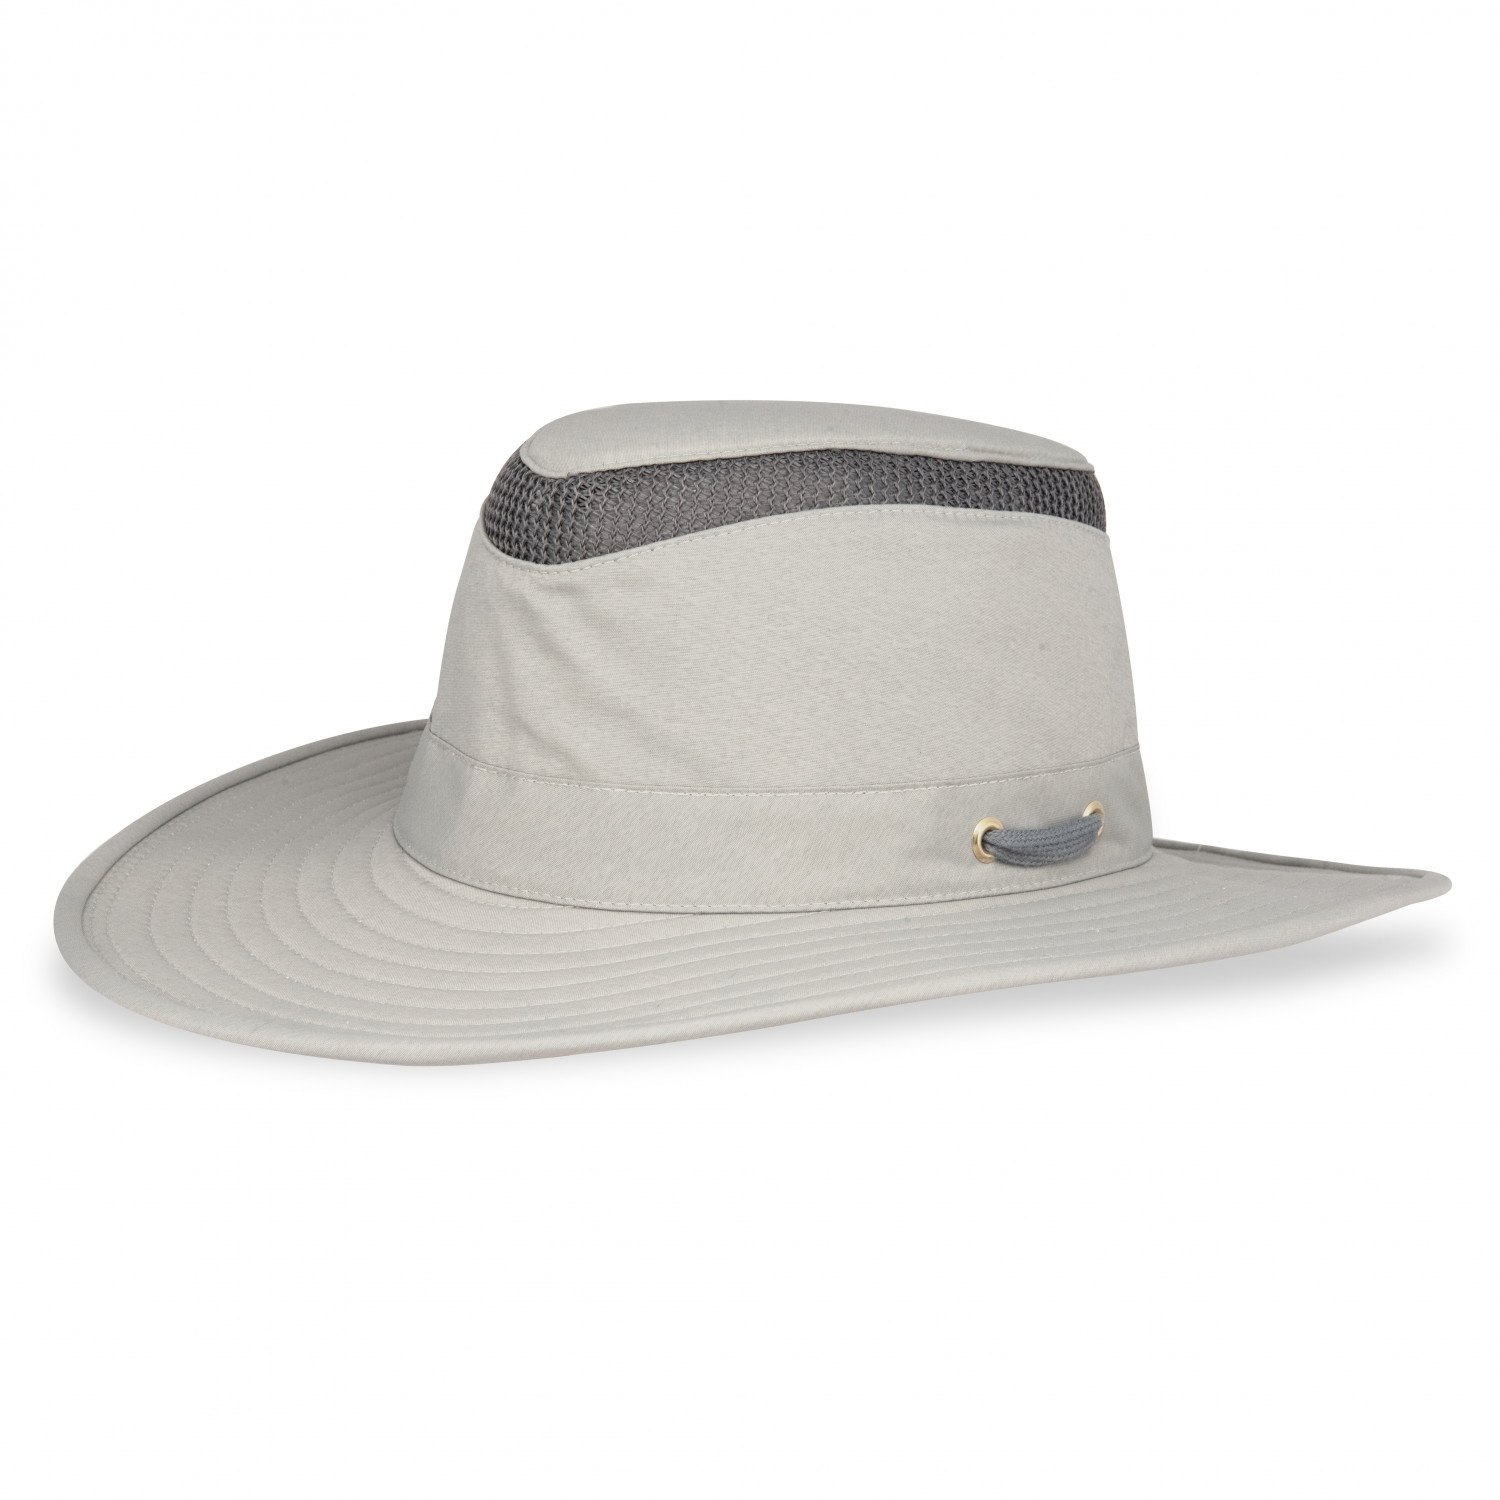 Кепка Tilley Airflo Broad Brim Hat, цвет Grey/Rock летняя вязаная шляпа рыбака с вырезами шляпа от солнца и солнца универсальная летняя шляпа от солнца уличные панамы